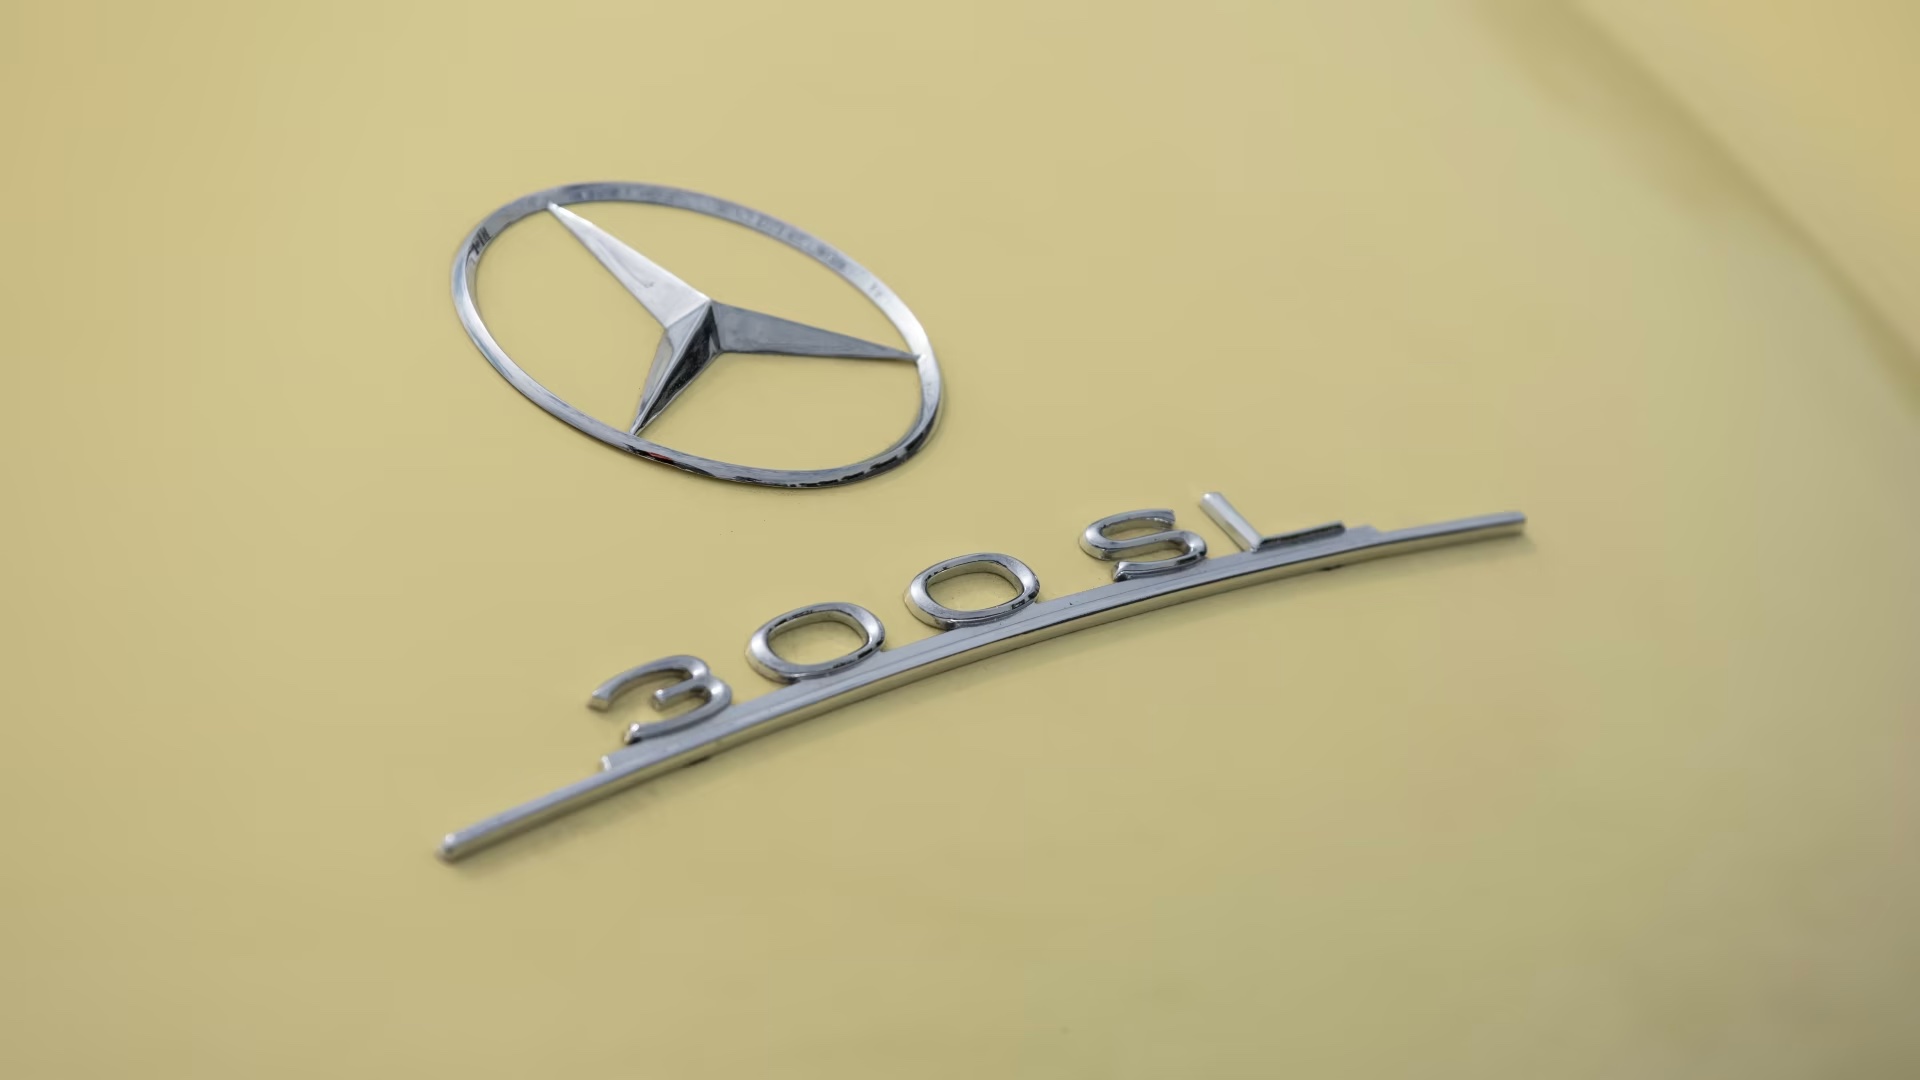 Alleged “fake“ Mercedes 300SL ignites scandal